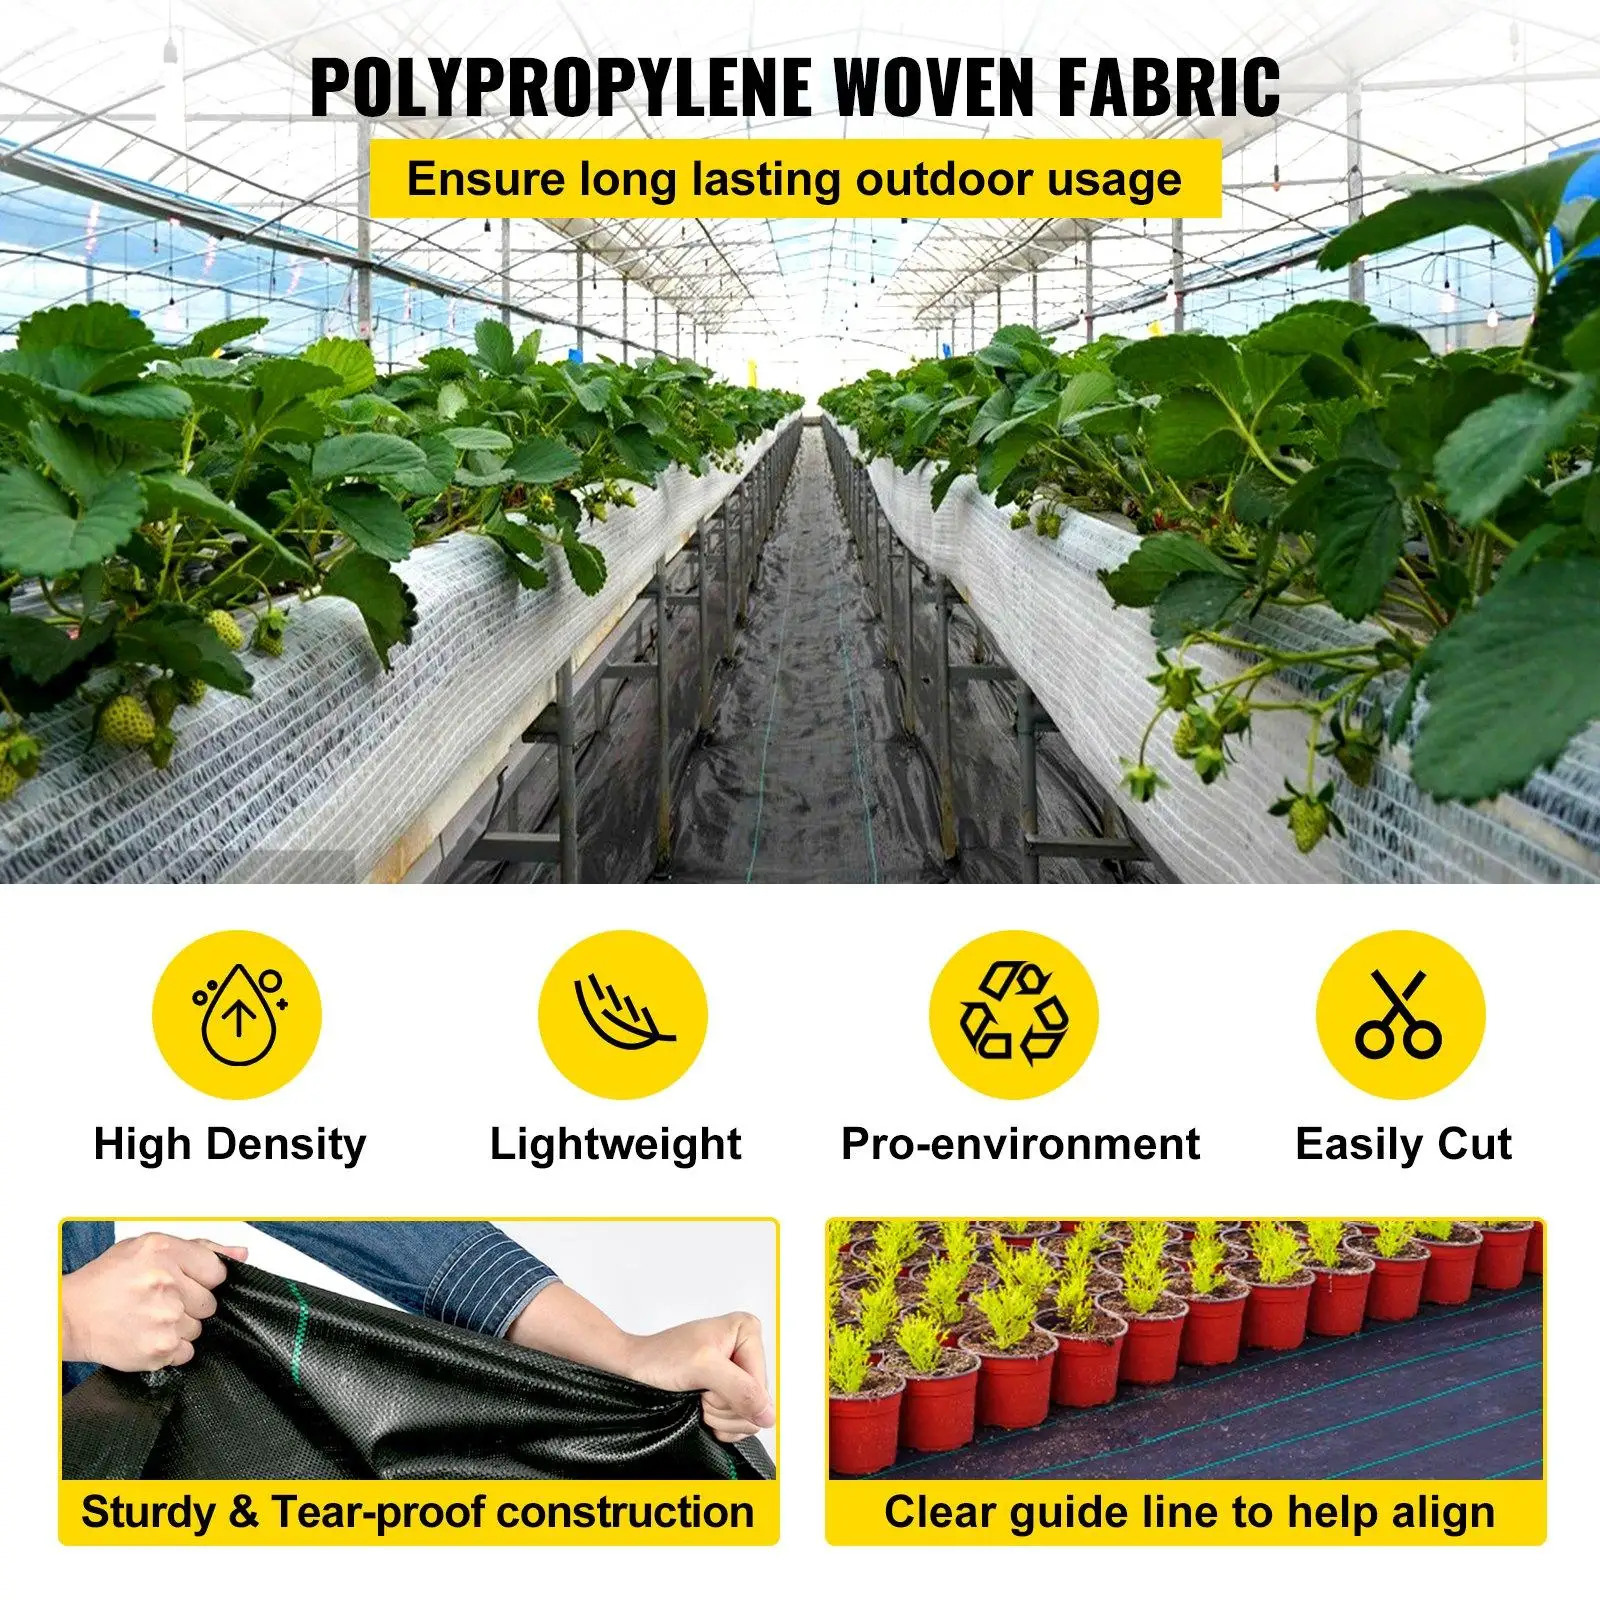 polypropylene woven fabric